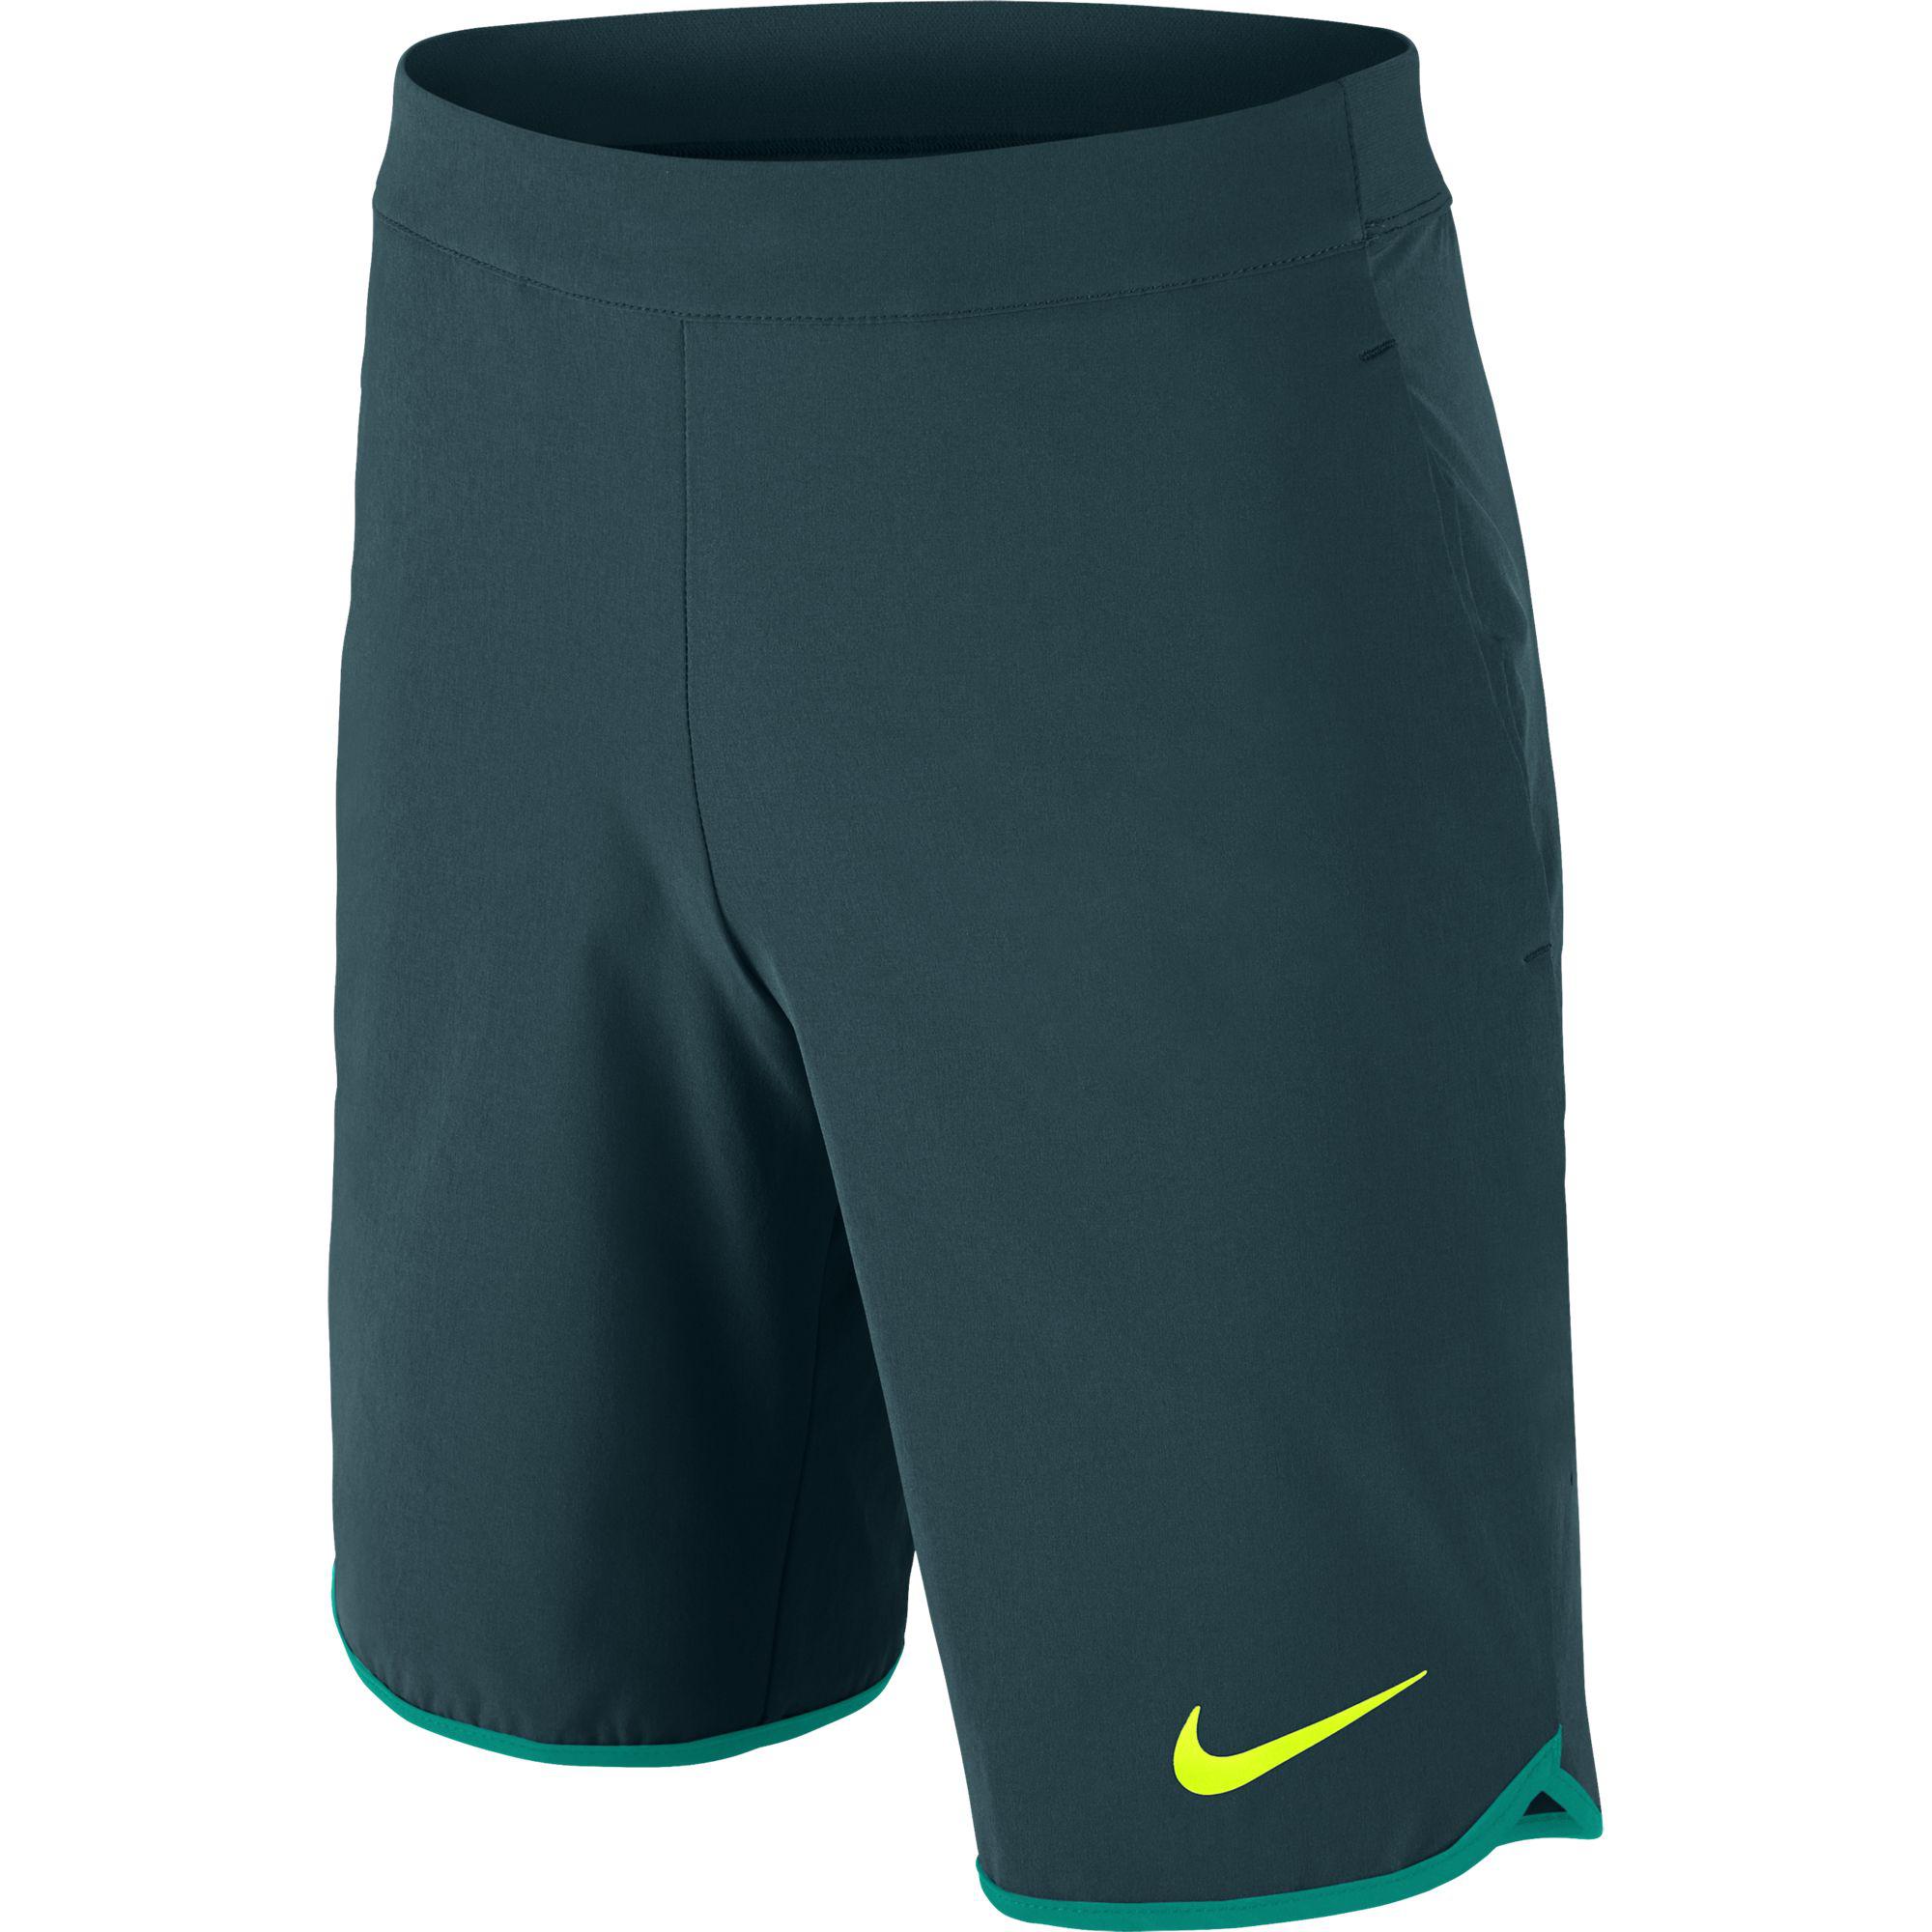 Nike Boys Gladiator Shorts - Turquoise/Teal/Volt - Tennisnuts.com